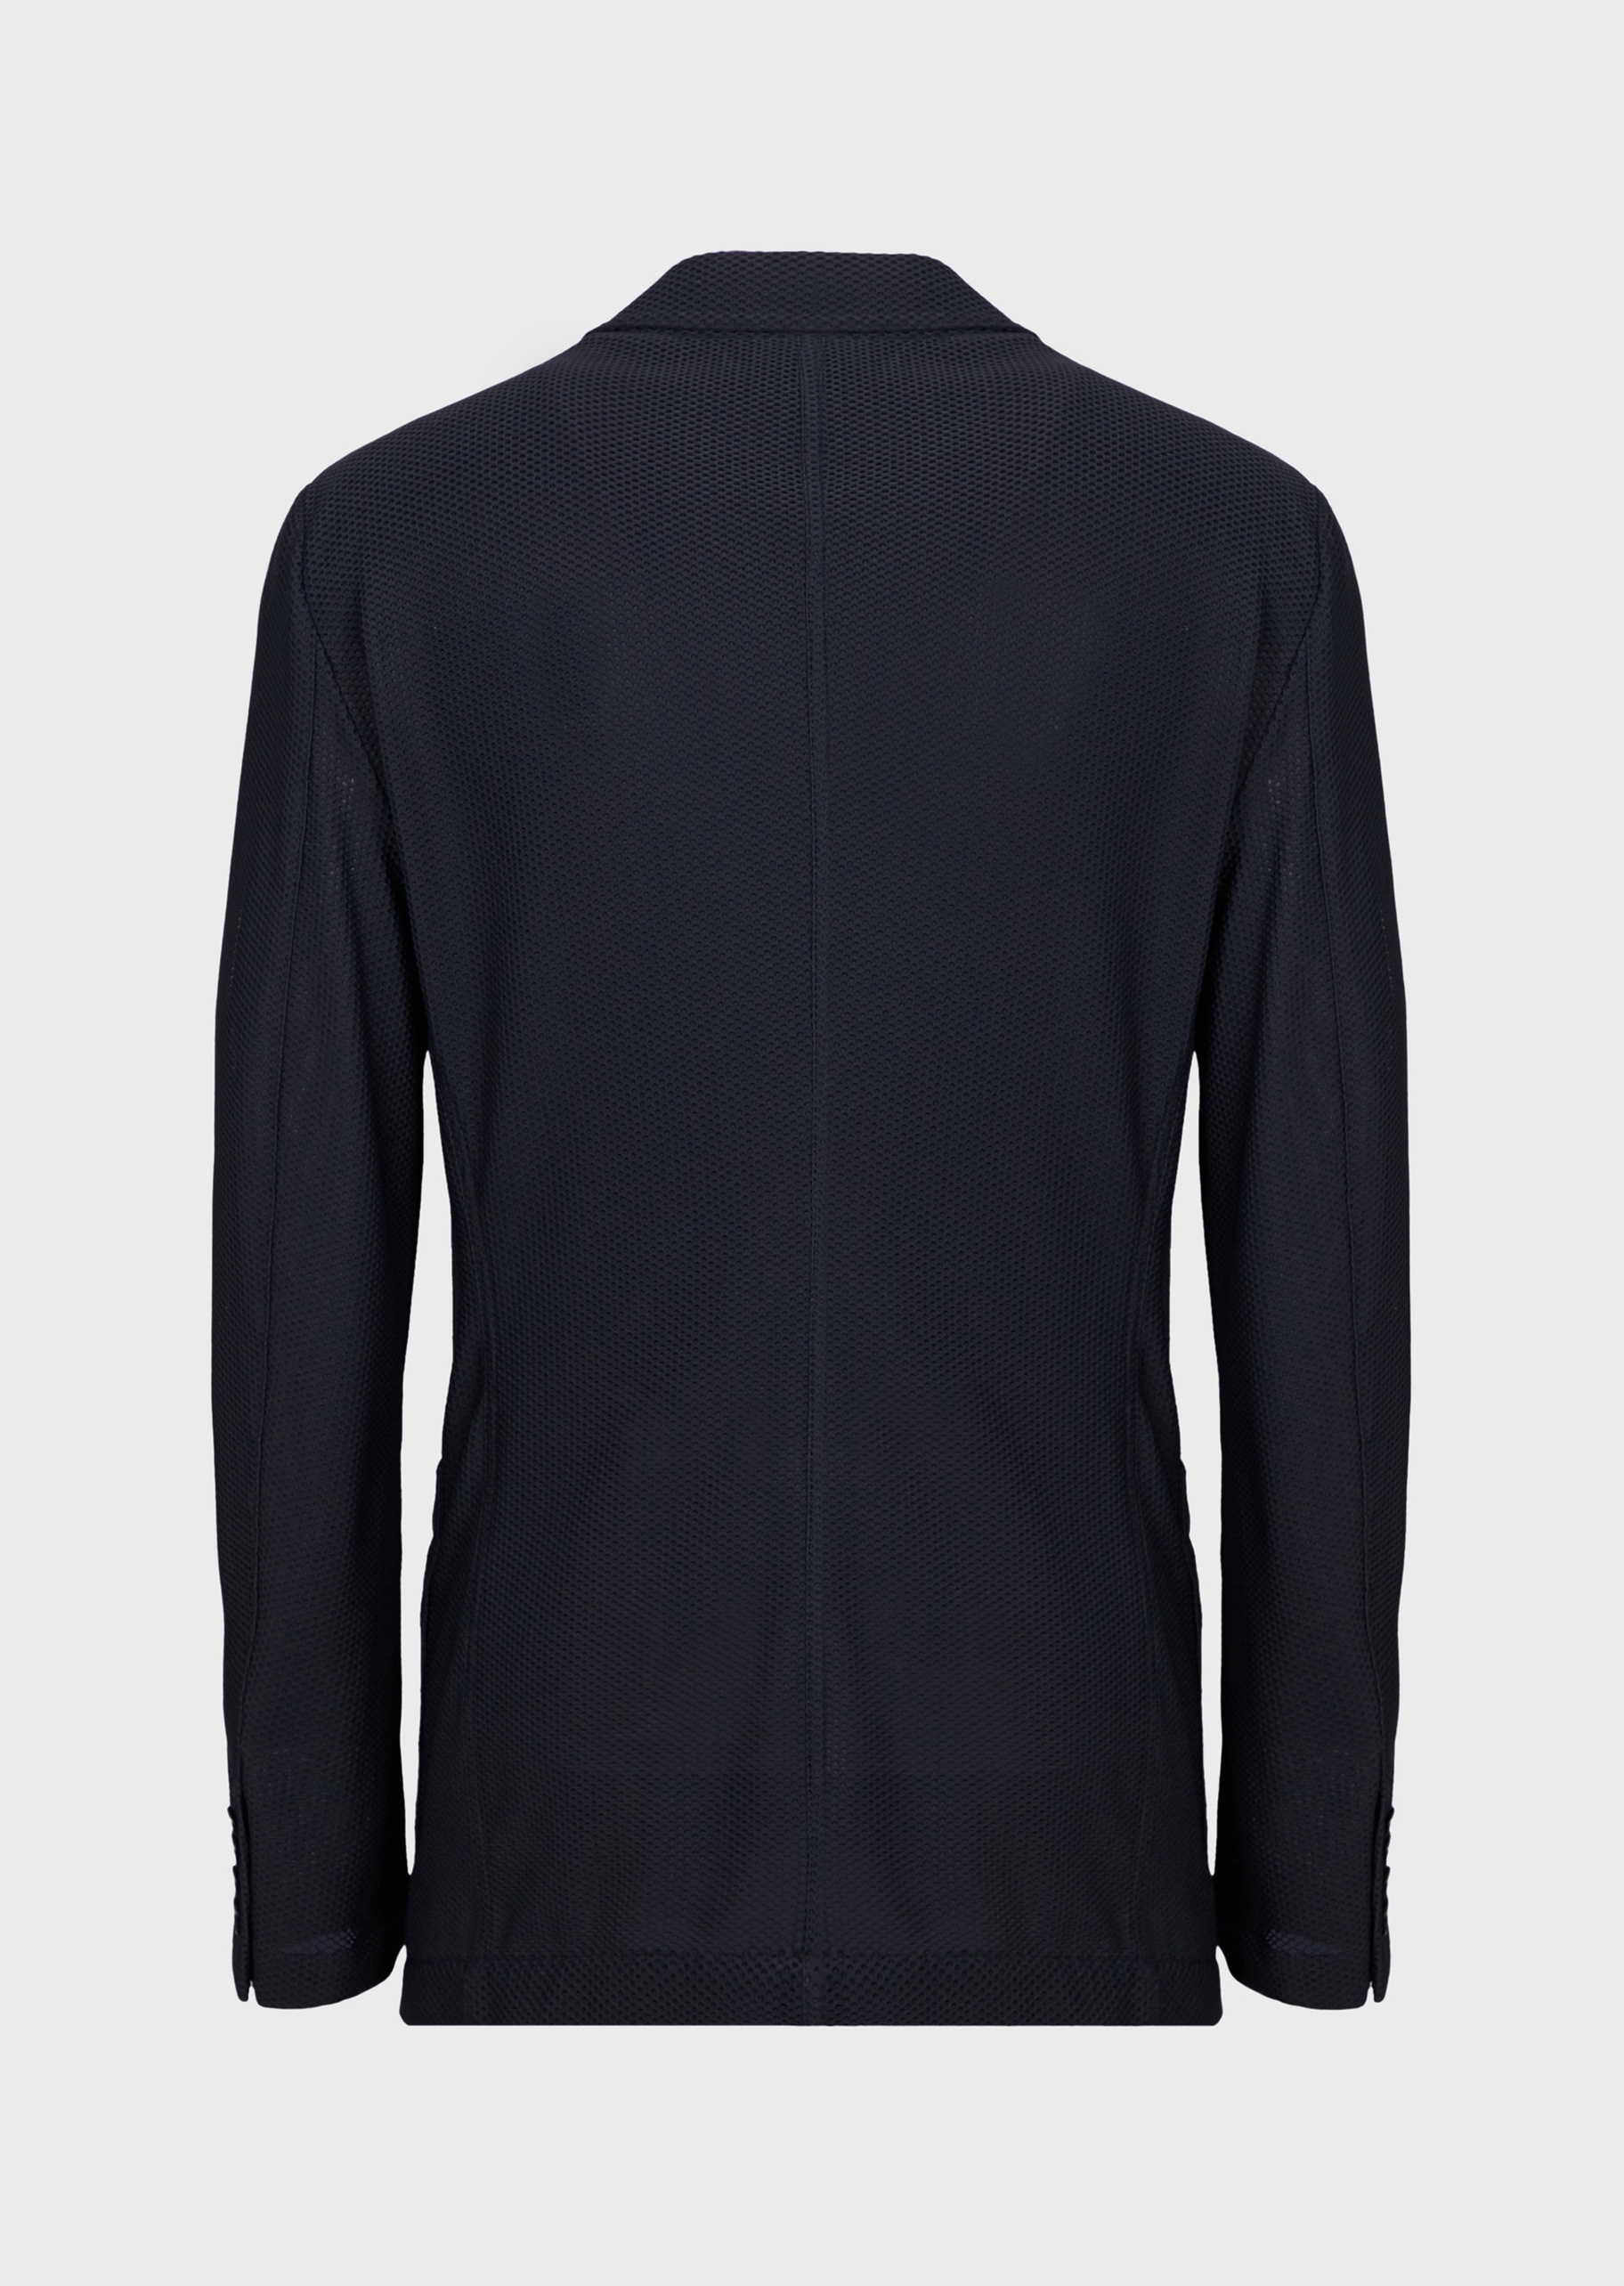 Giorgio Armani 男士休闲弹力戗驳领网面纯色西装外套